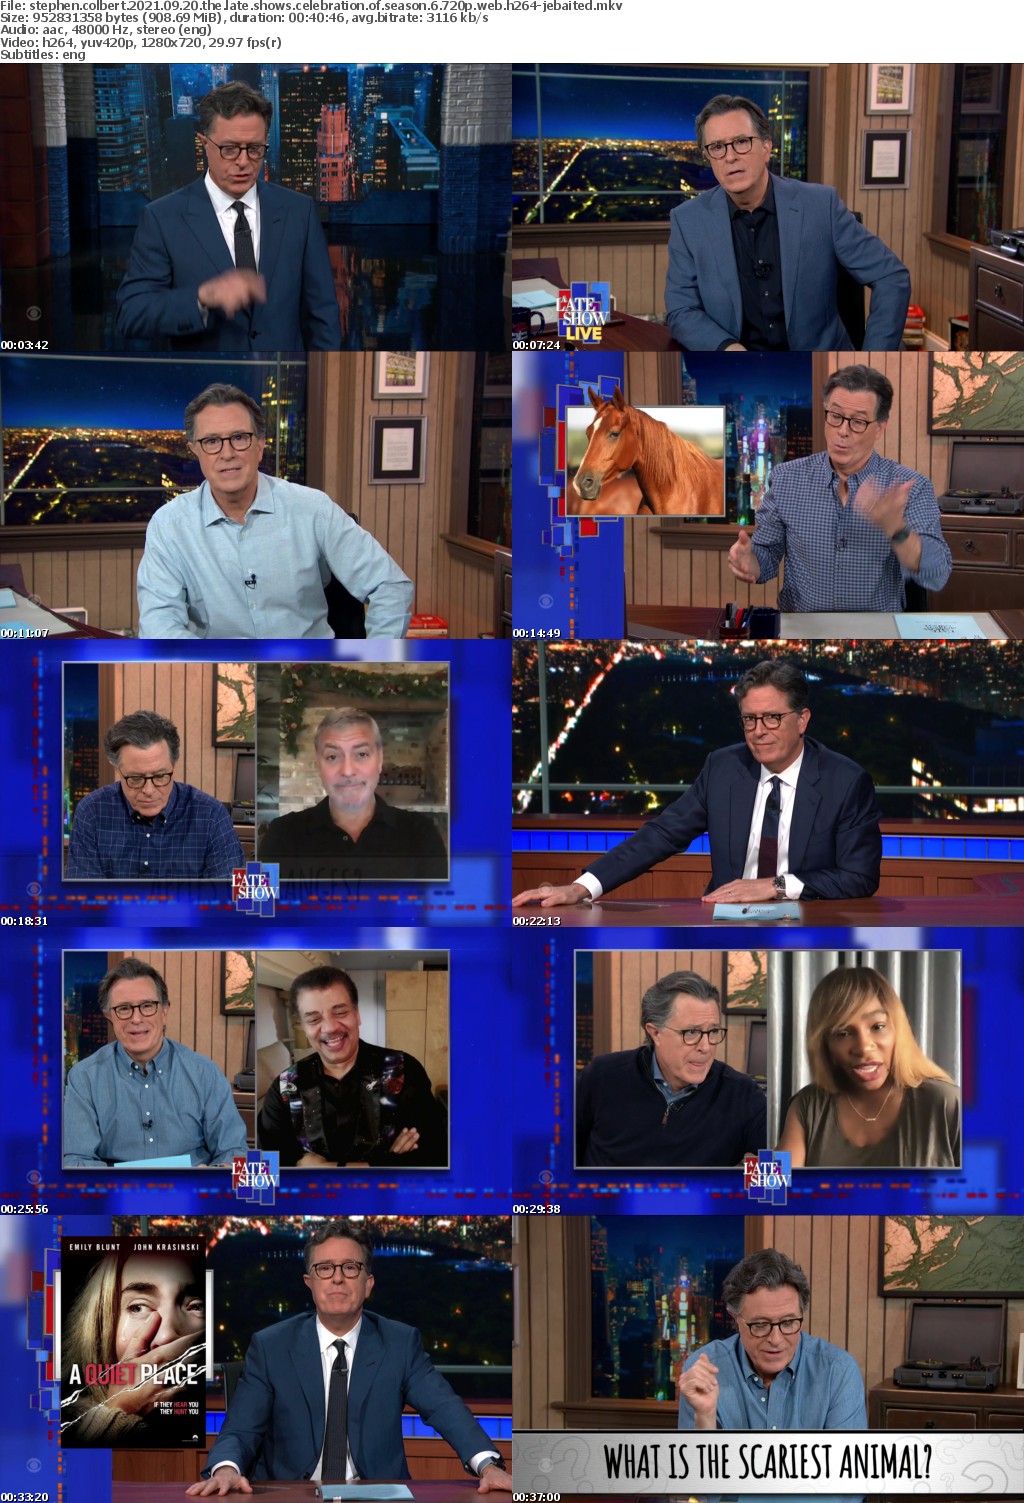 Stephen Colbert 2021 09 20 The Late Shows Celebration of Season 6 720p WEB H264-JEBAITED